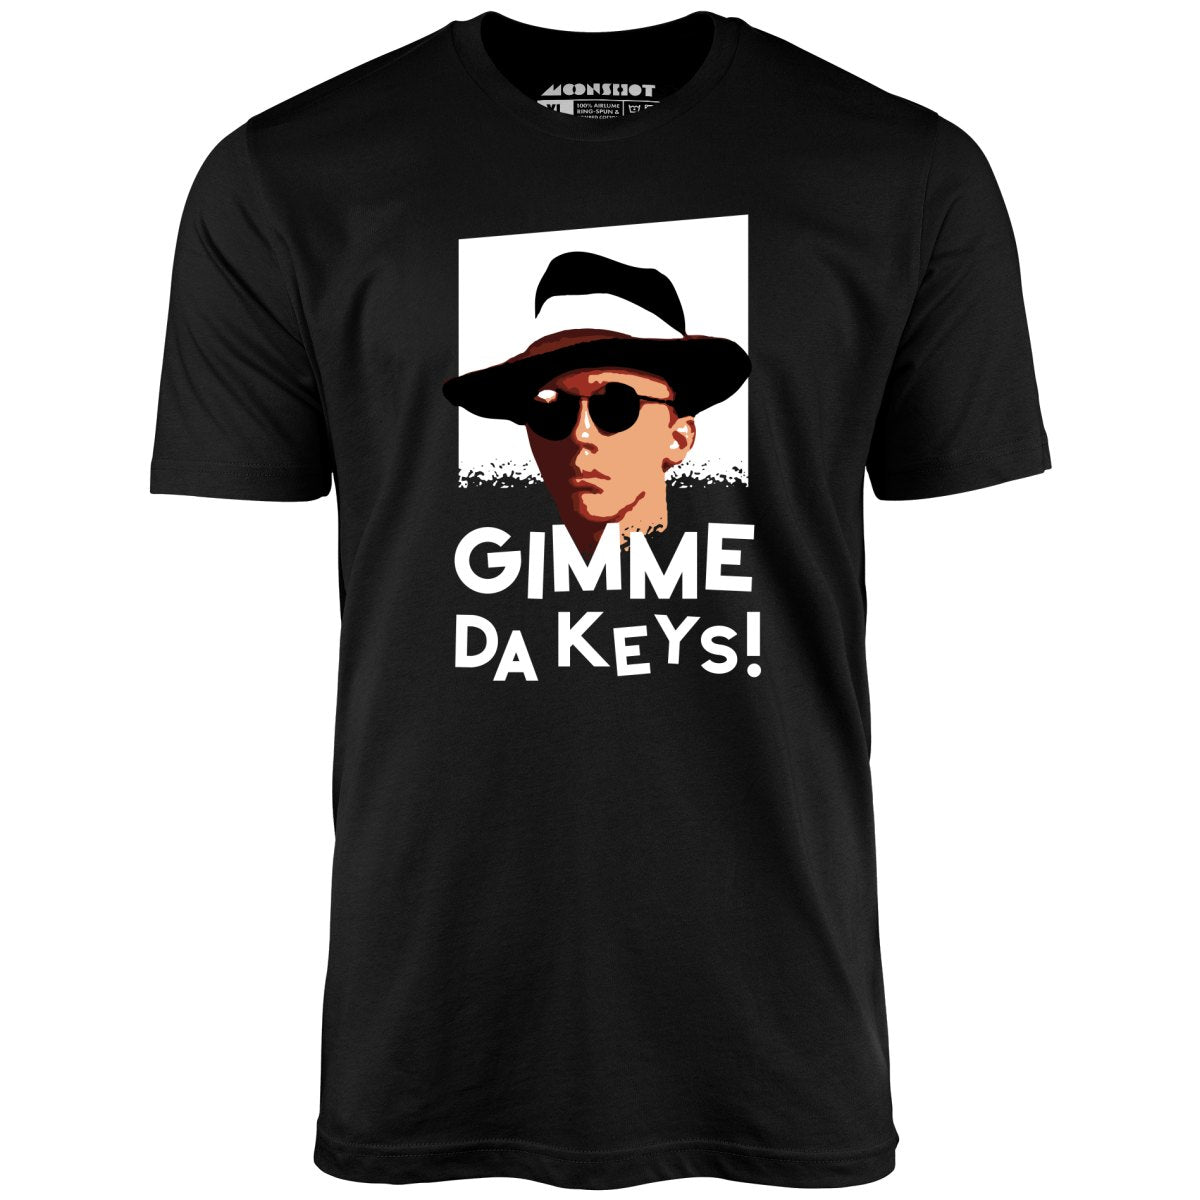 Gimme Da Keys! - Unisex T-Shirt